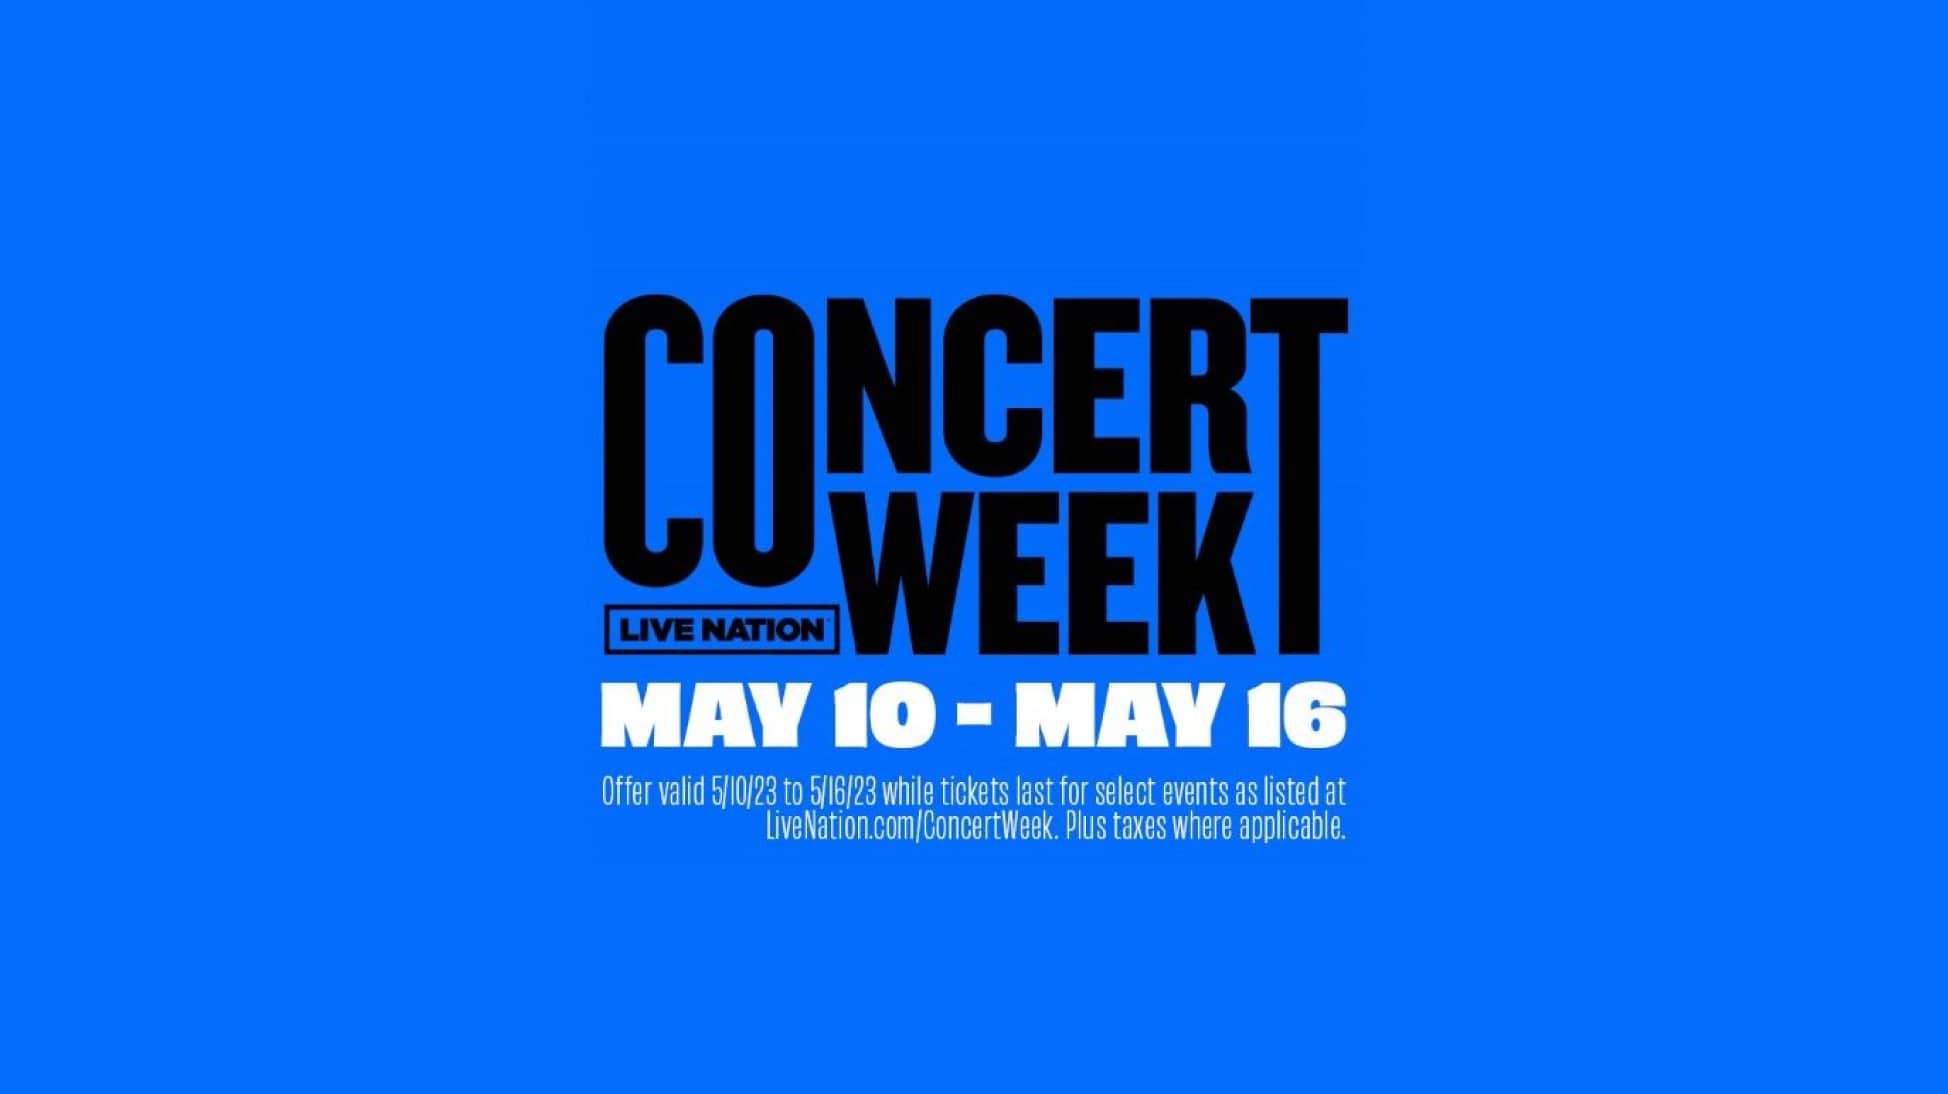 concert week promo image